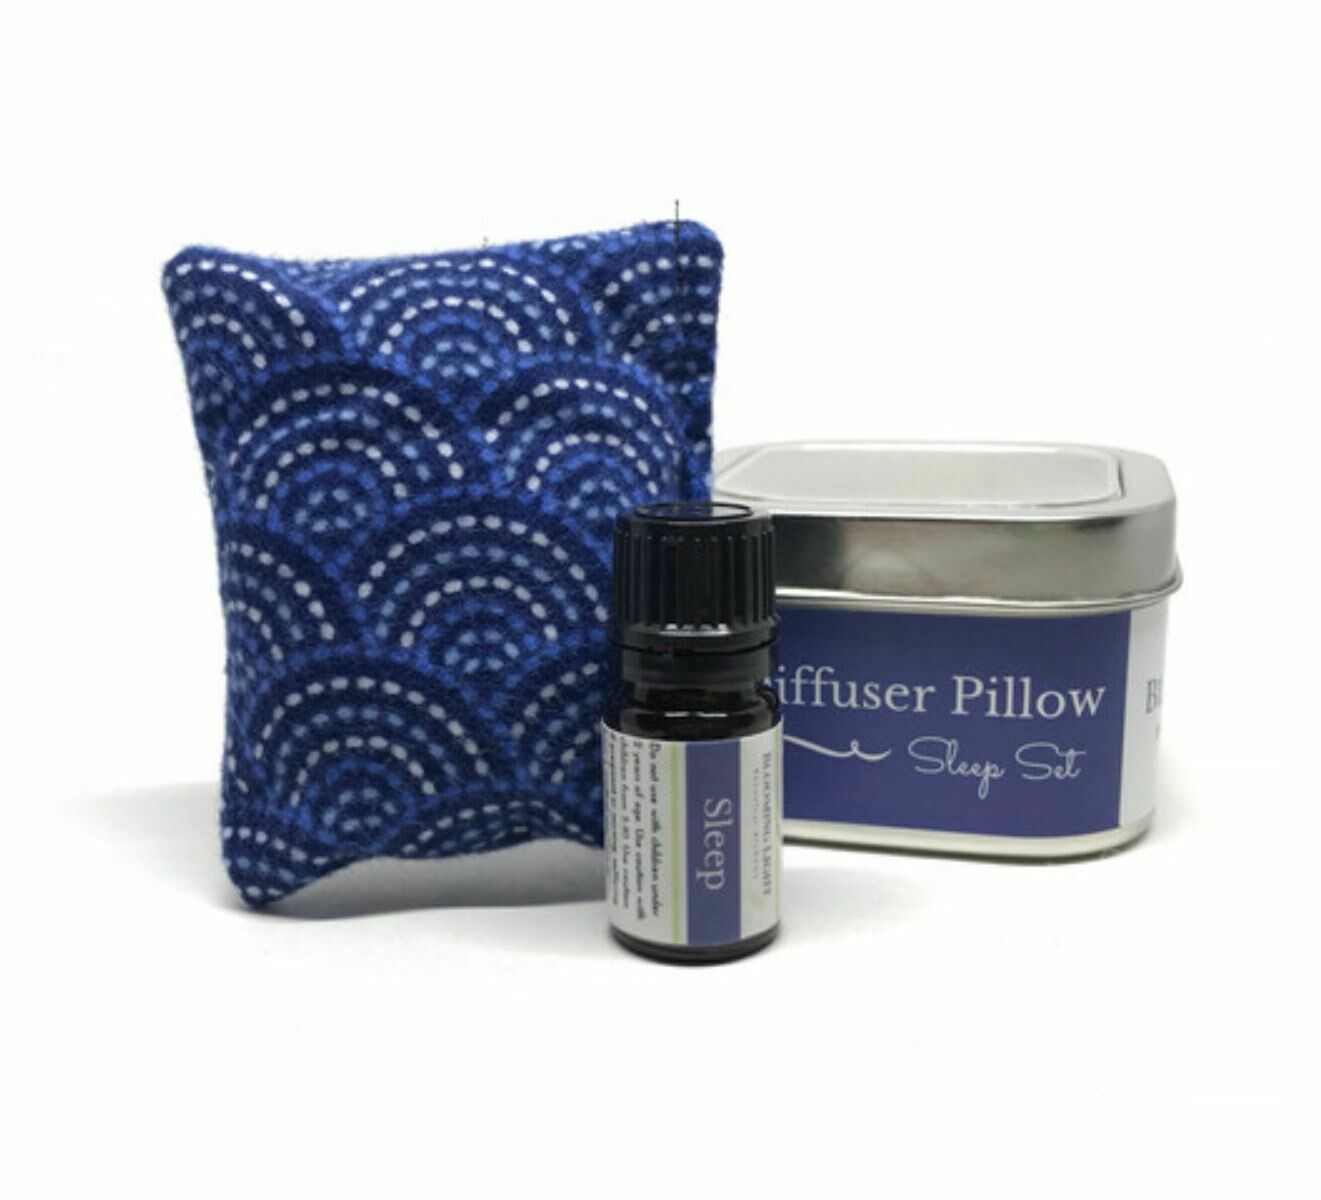 Sleep Oil & Diffuser Pillow Tin